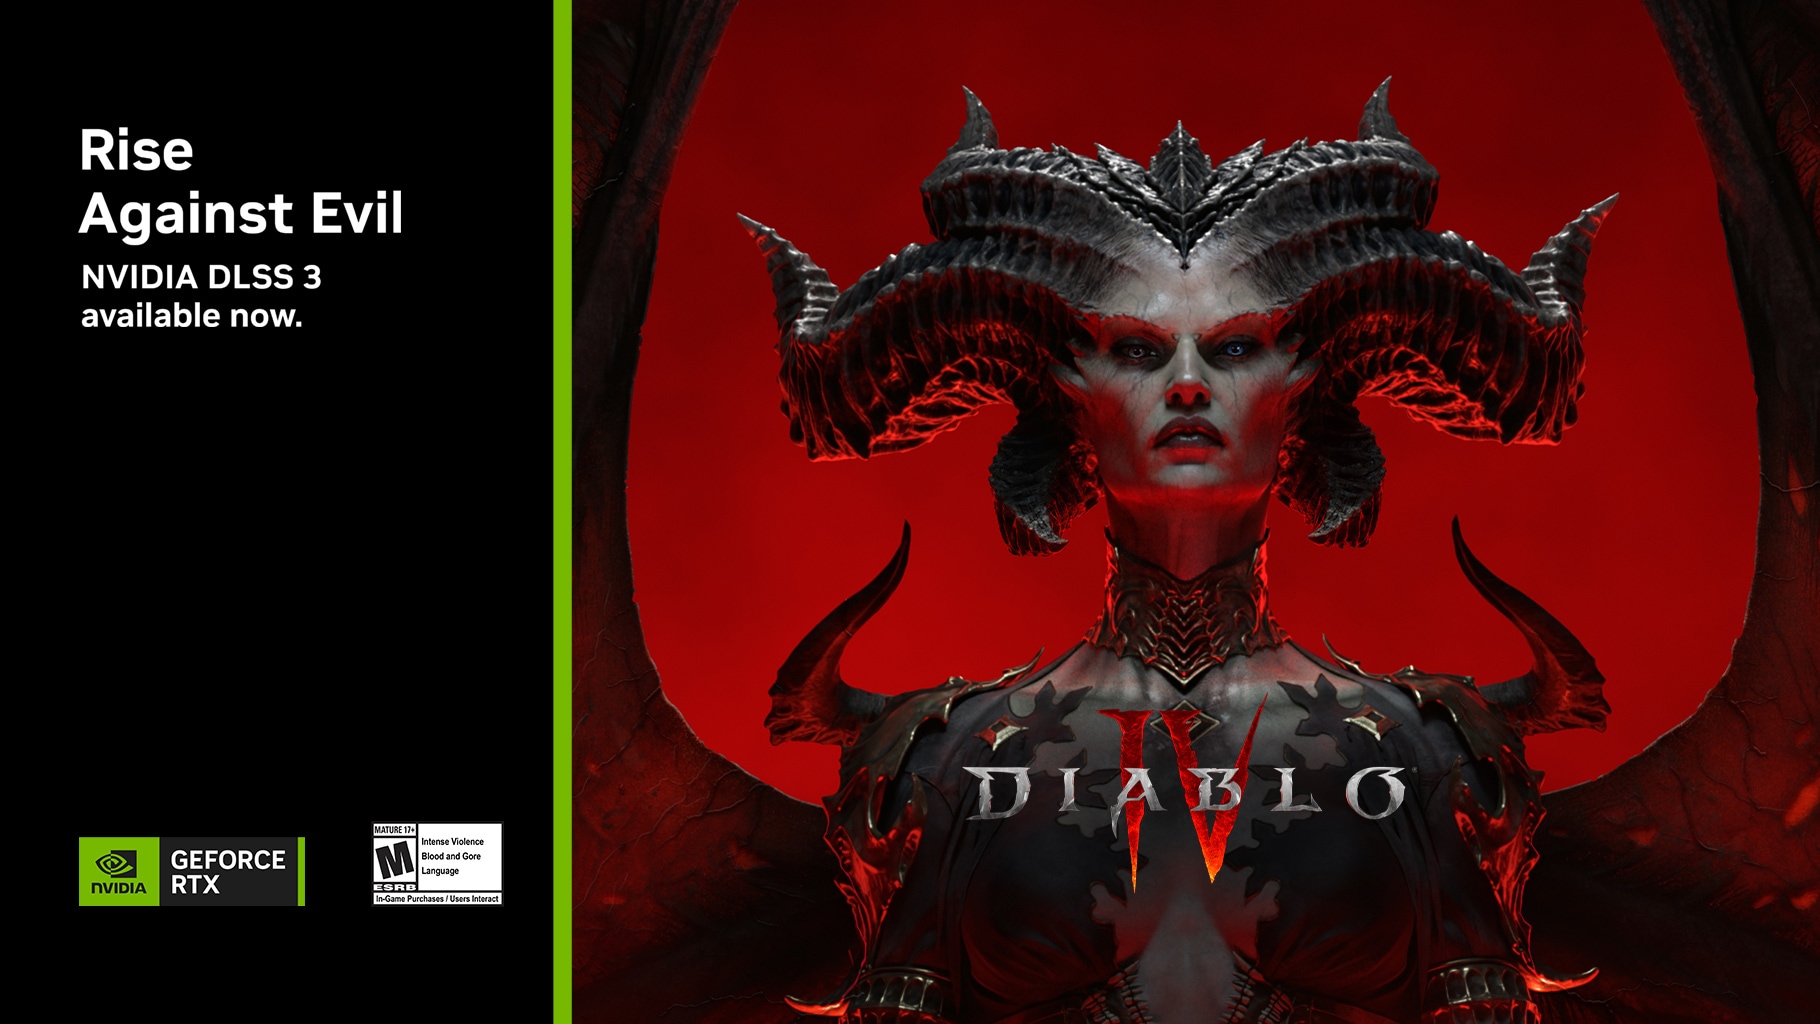 Diablo 4 Prime Gaming Rewards Coming Soon on July 6th - Wowhead News